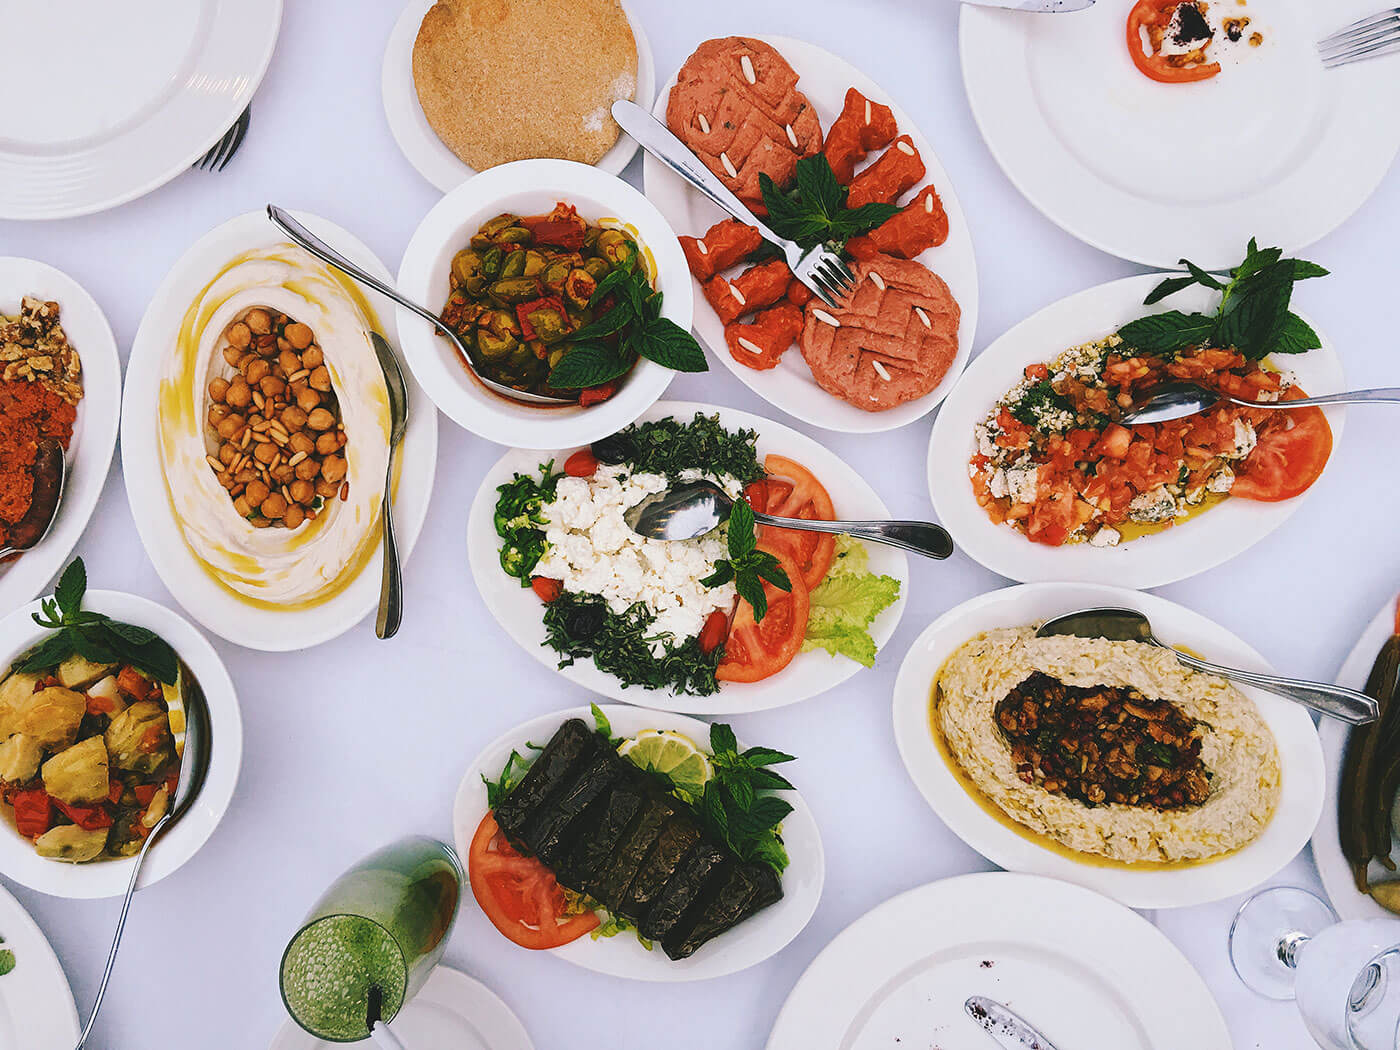 Mezze - aka Arabic tapas, endless array of food at Fakhreldin